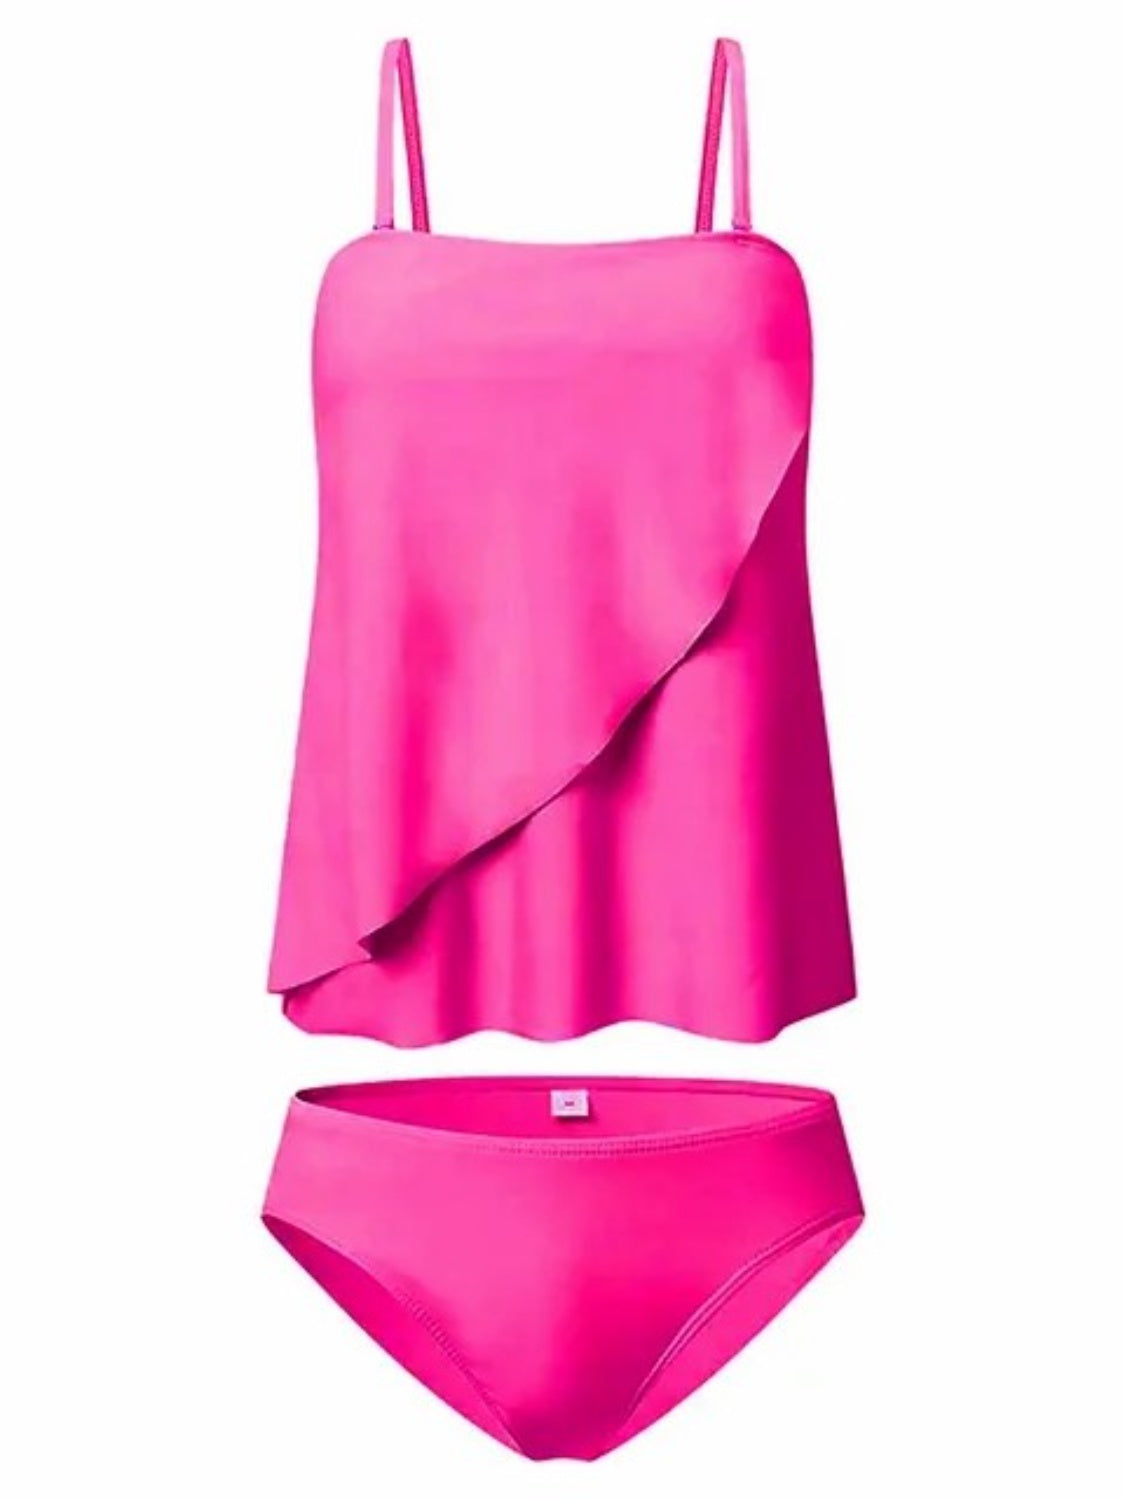 TEEK - Detachable Strap Top and Brief Swim Set SWIMWEAR TEEK Trend Hot Pink S 